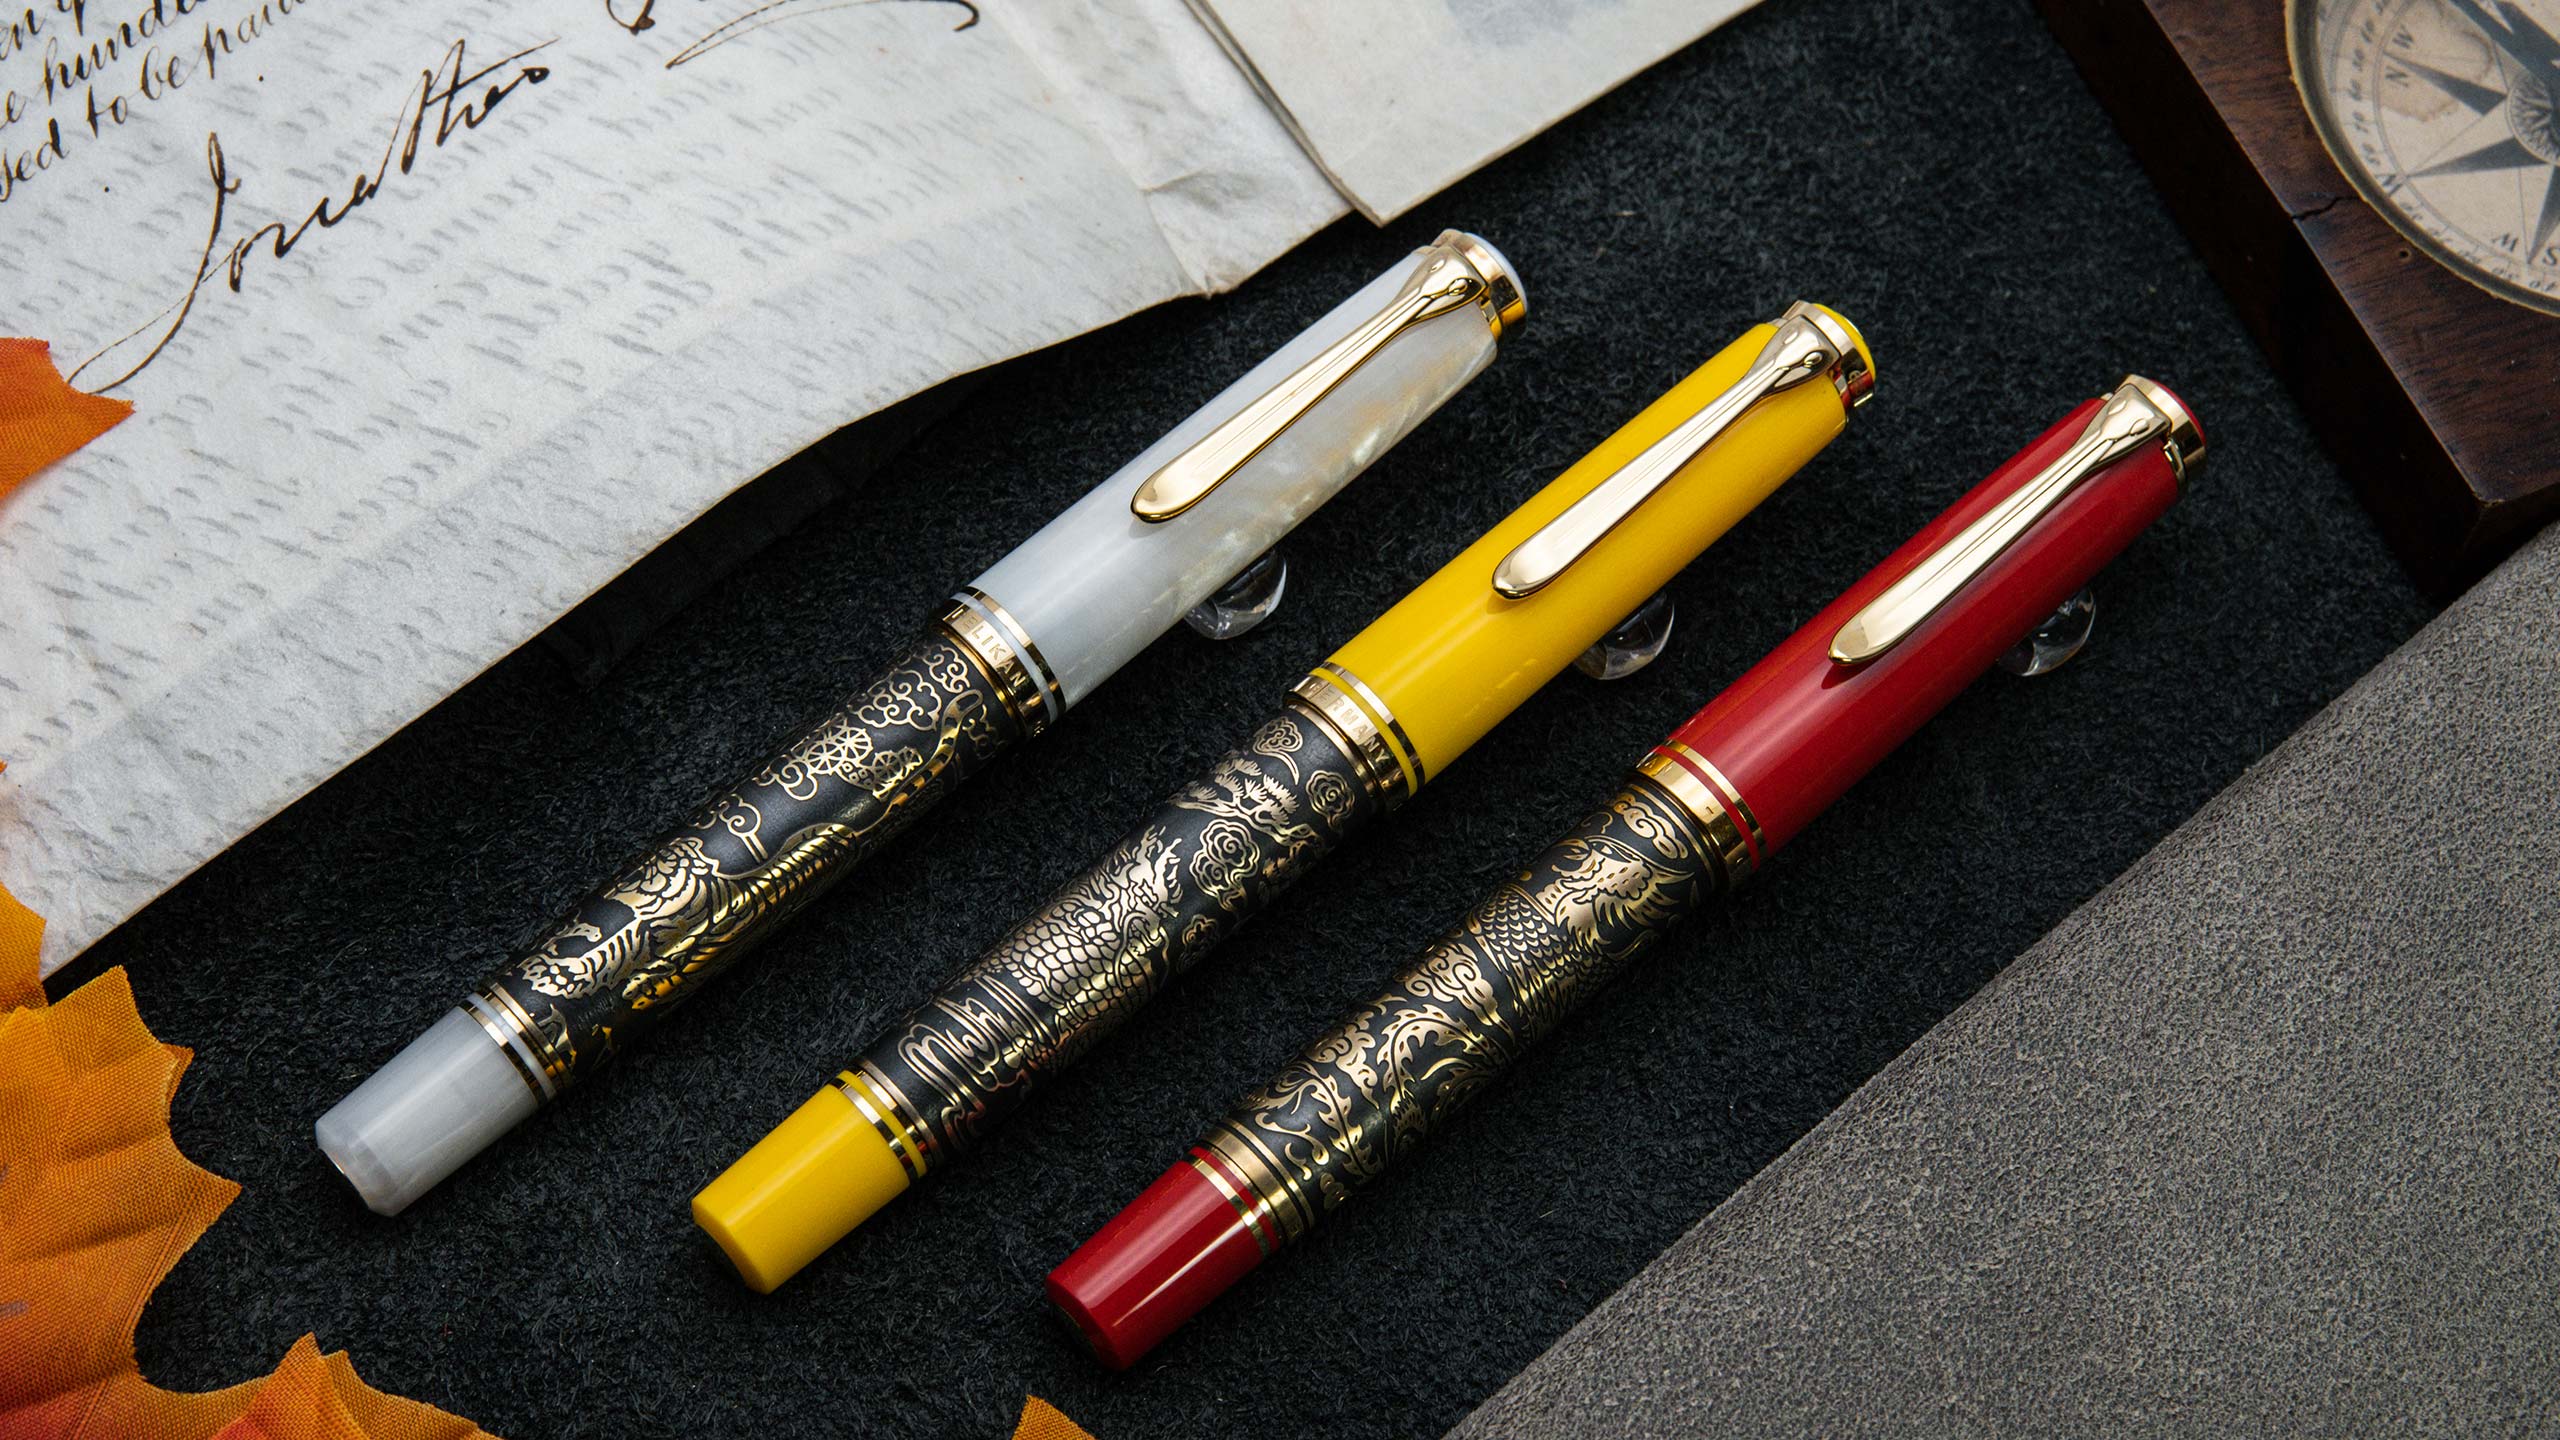 PE0033 - Pelikan - Golden Phoenix - Collectible pens & more PE0032 - Pelikan - Kirin - Collectible pens & more-13 PE0018 - Pelika - White tiger